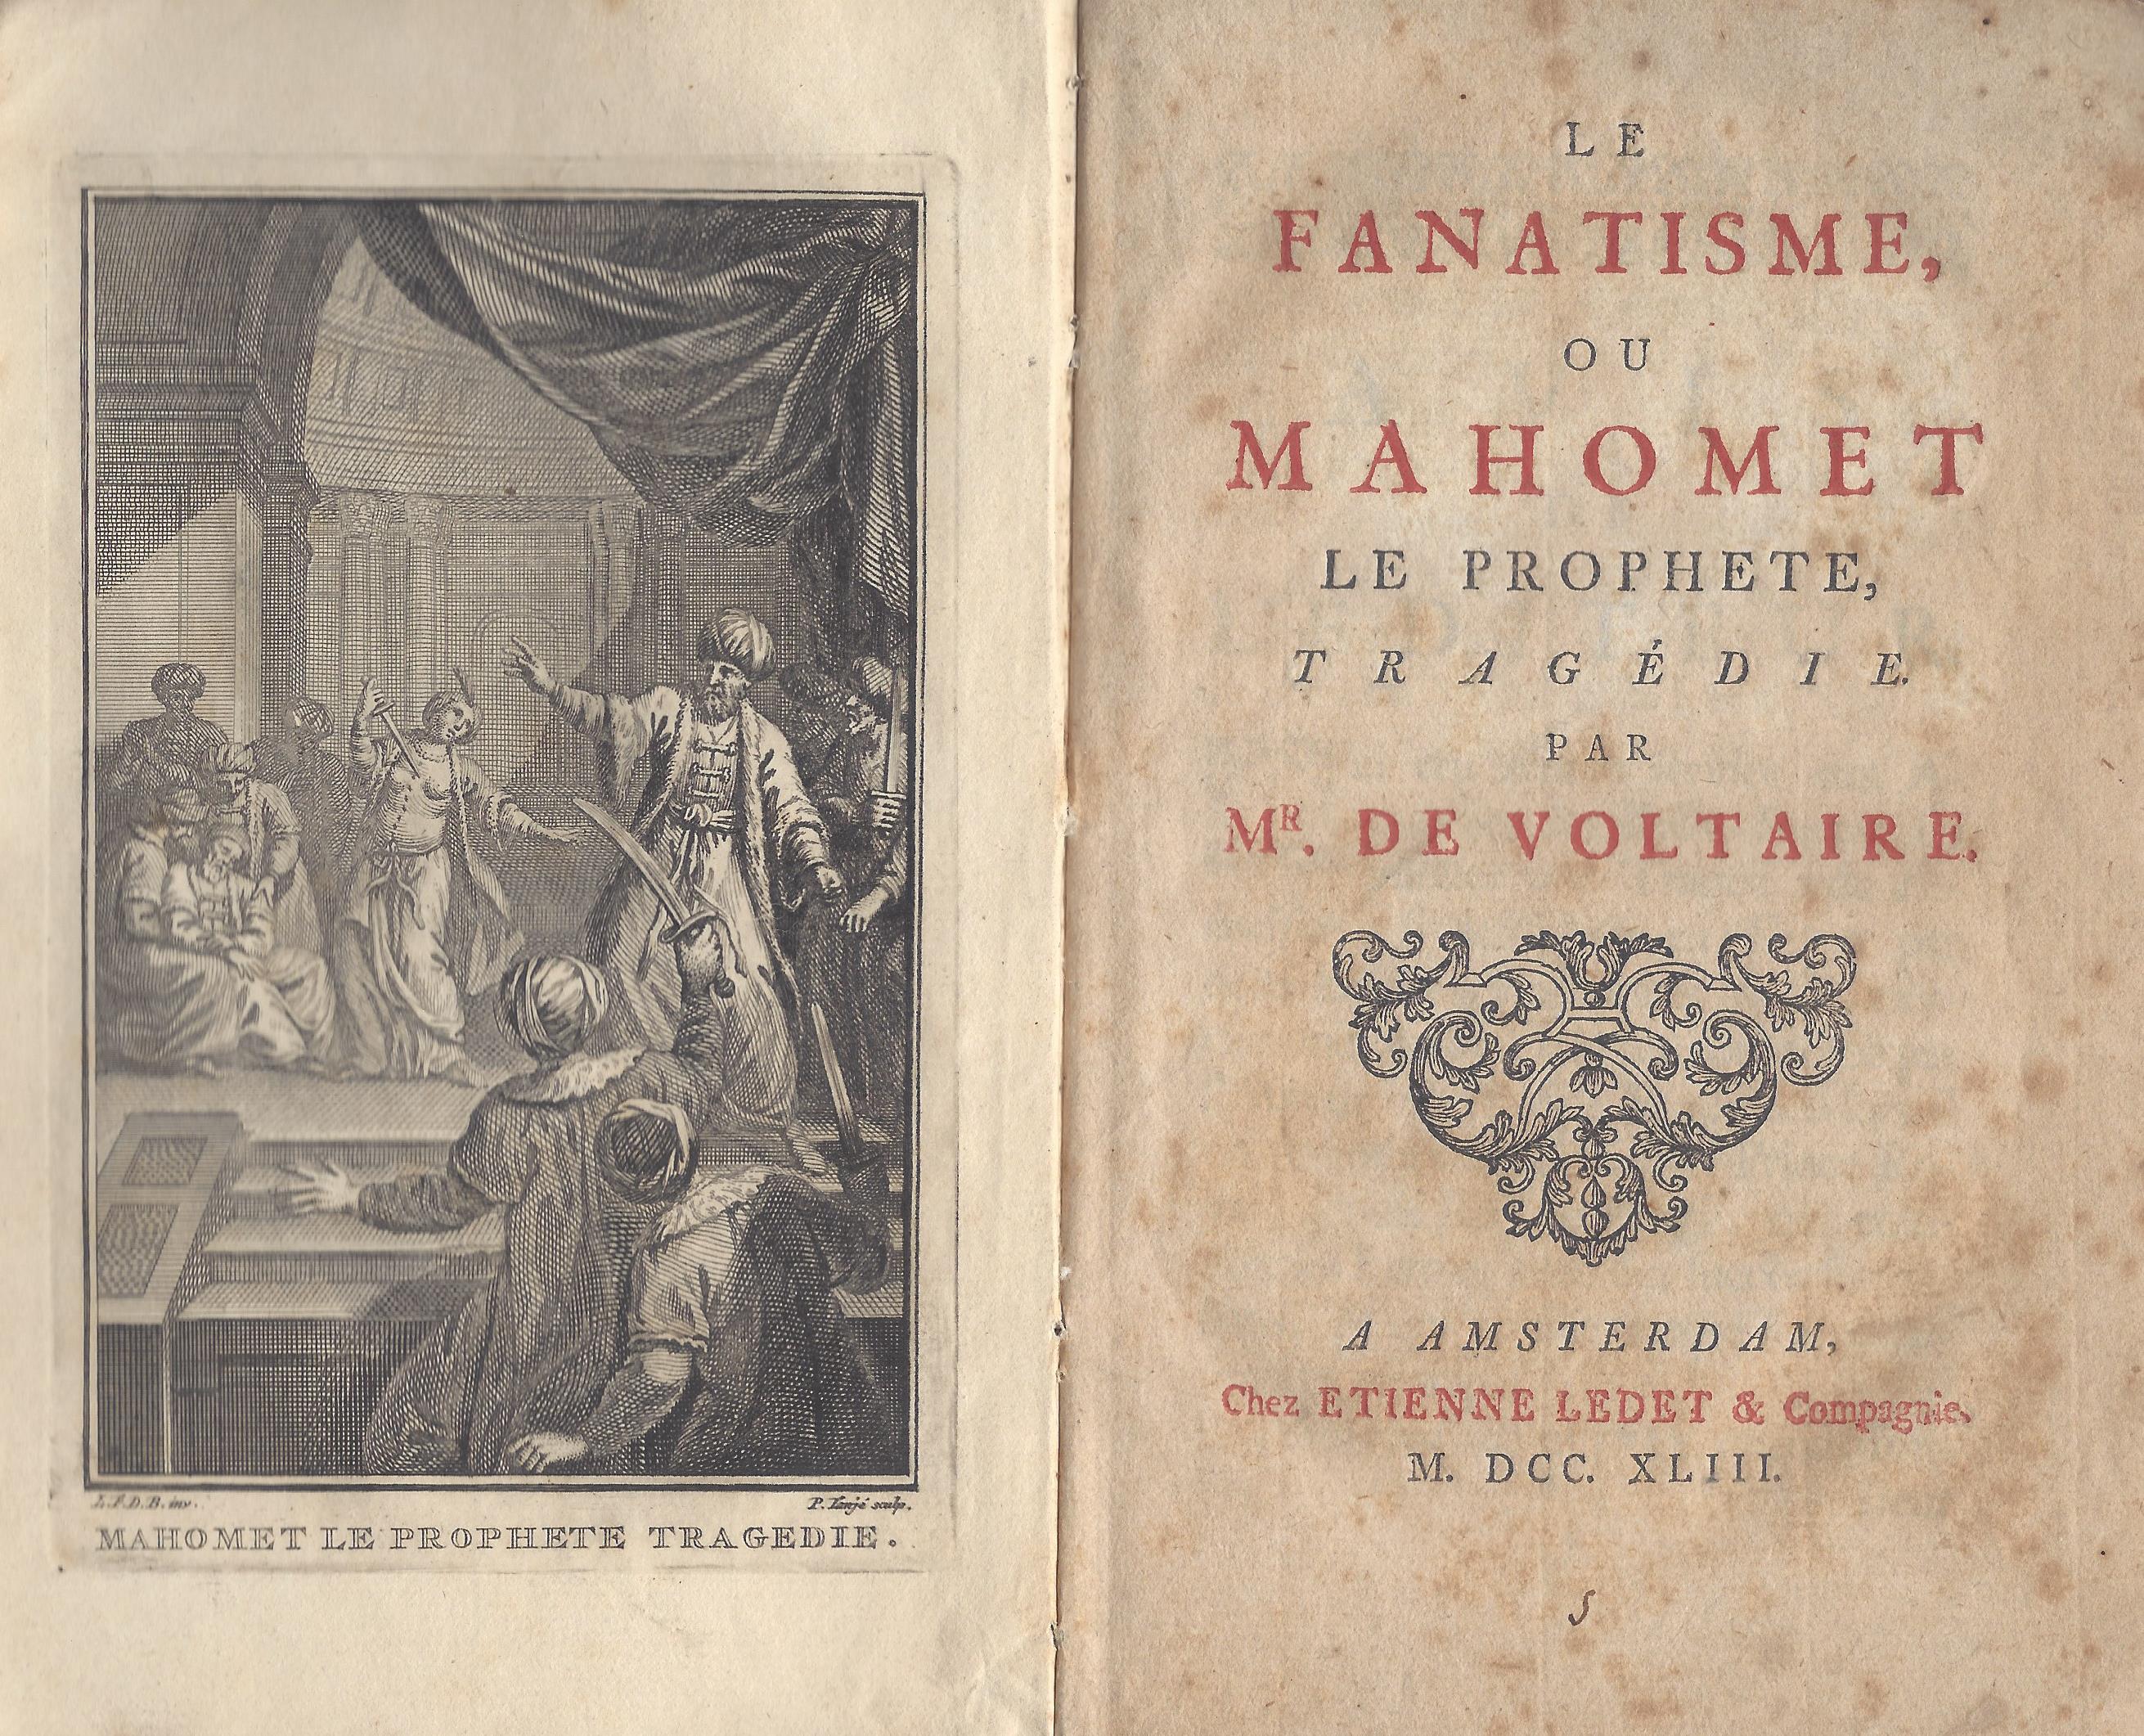 Voltaire'in Le Fanatism, ou Mahomet adlı eseri